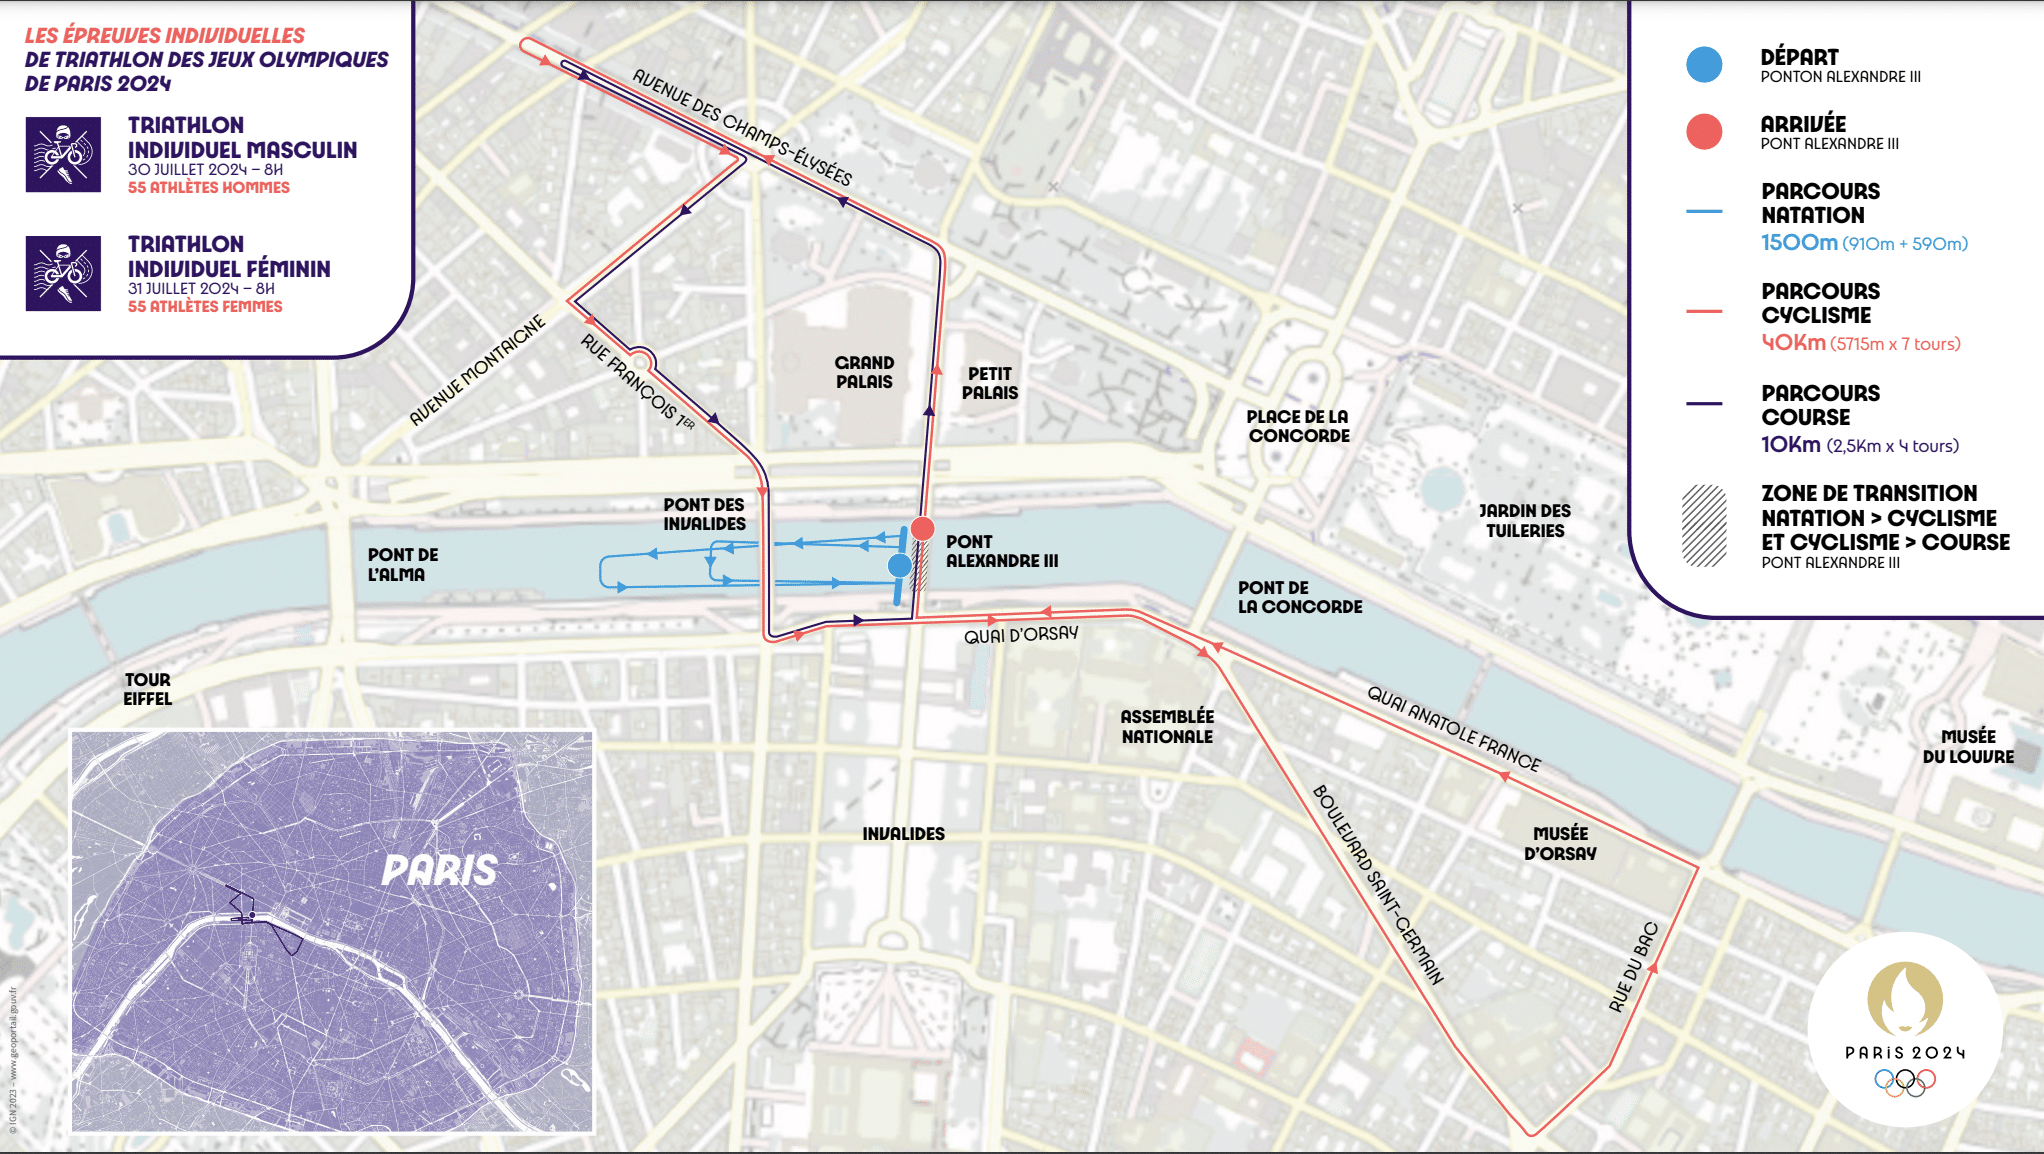 Individual elite circuit of the Paris 2024 Olympic Games